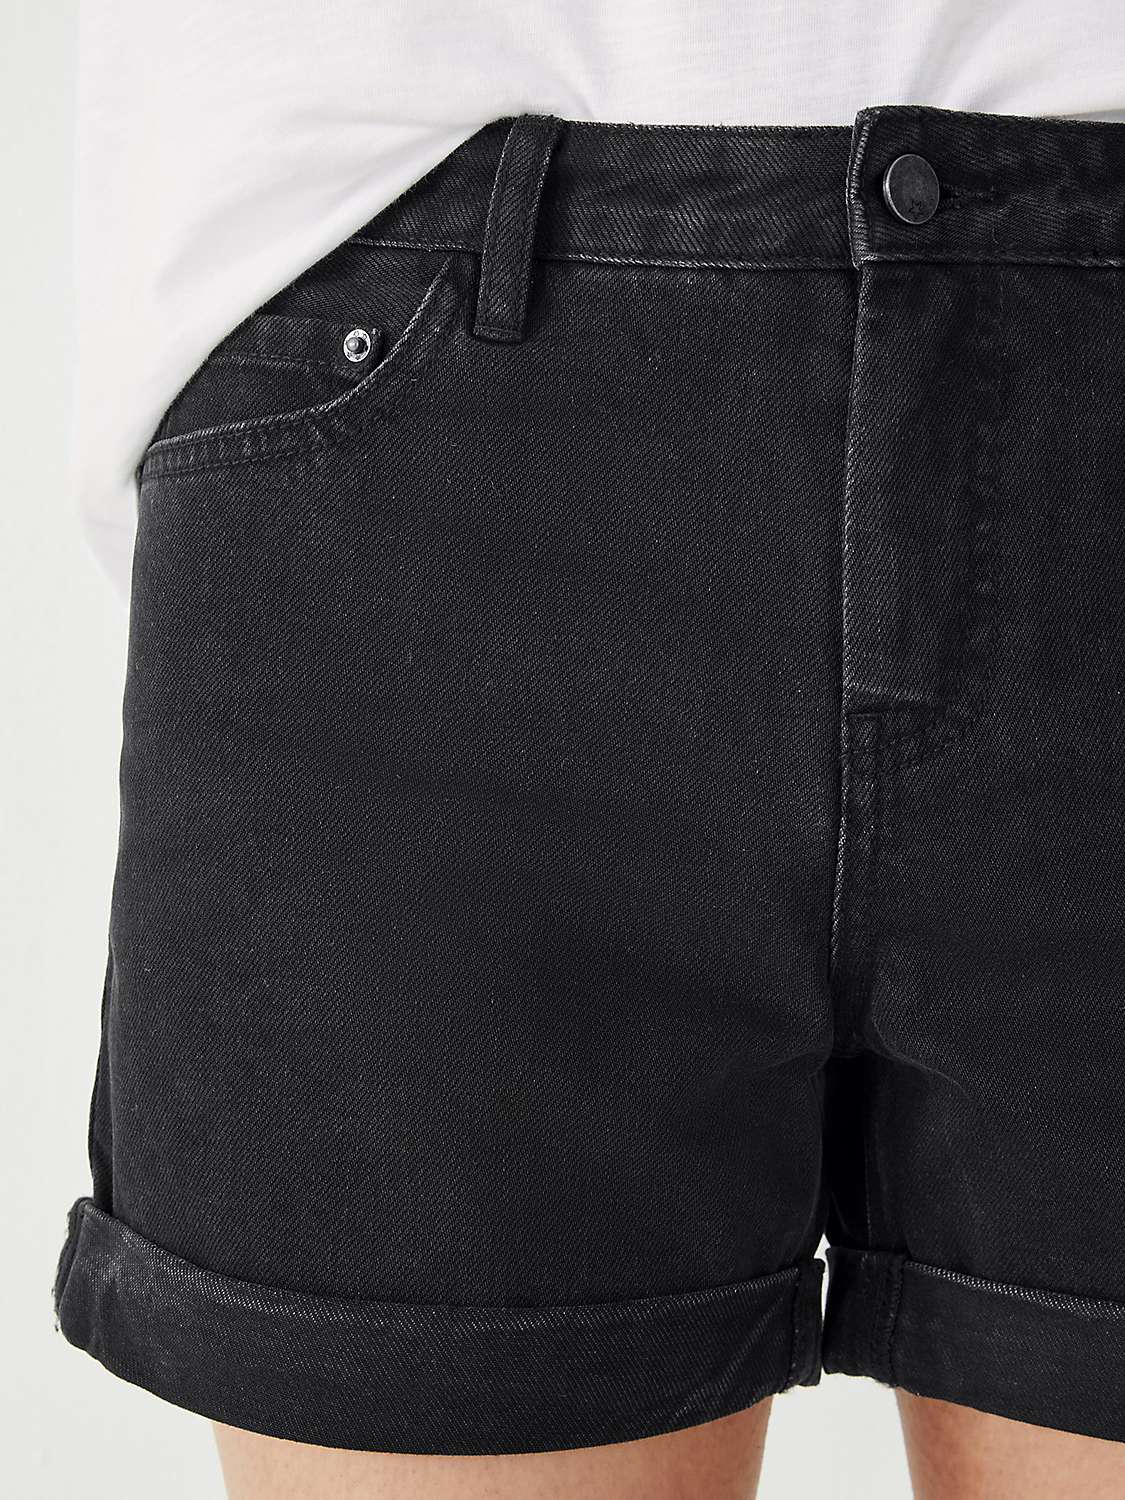 Buy HUSH Cara Denim Shorts, Washed Black Online at johnlewis.com